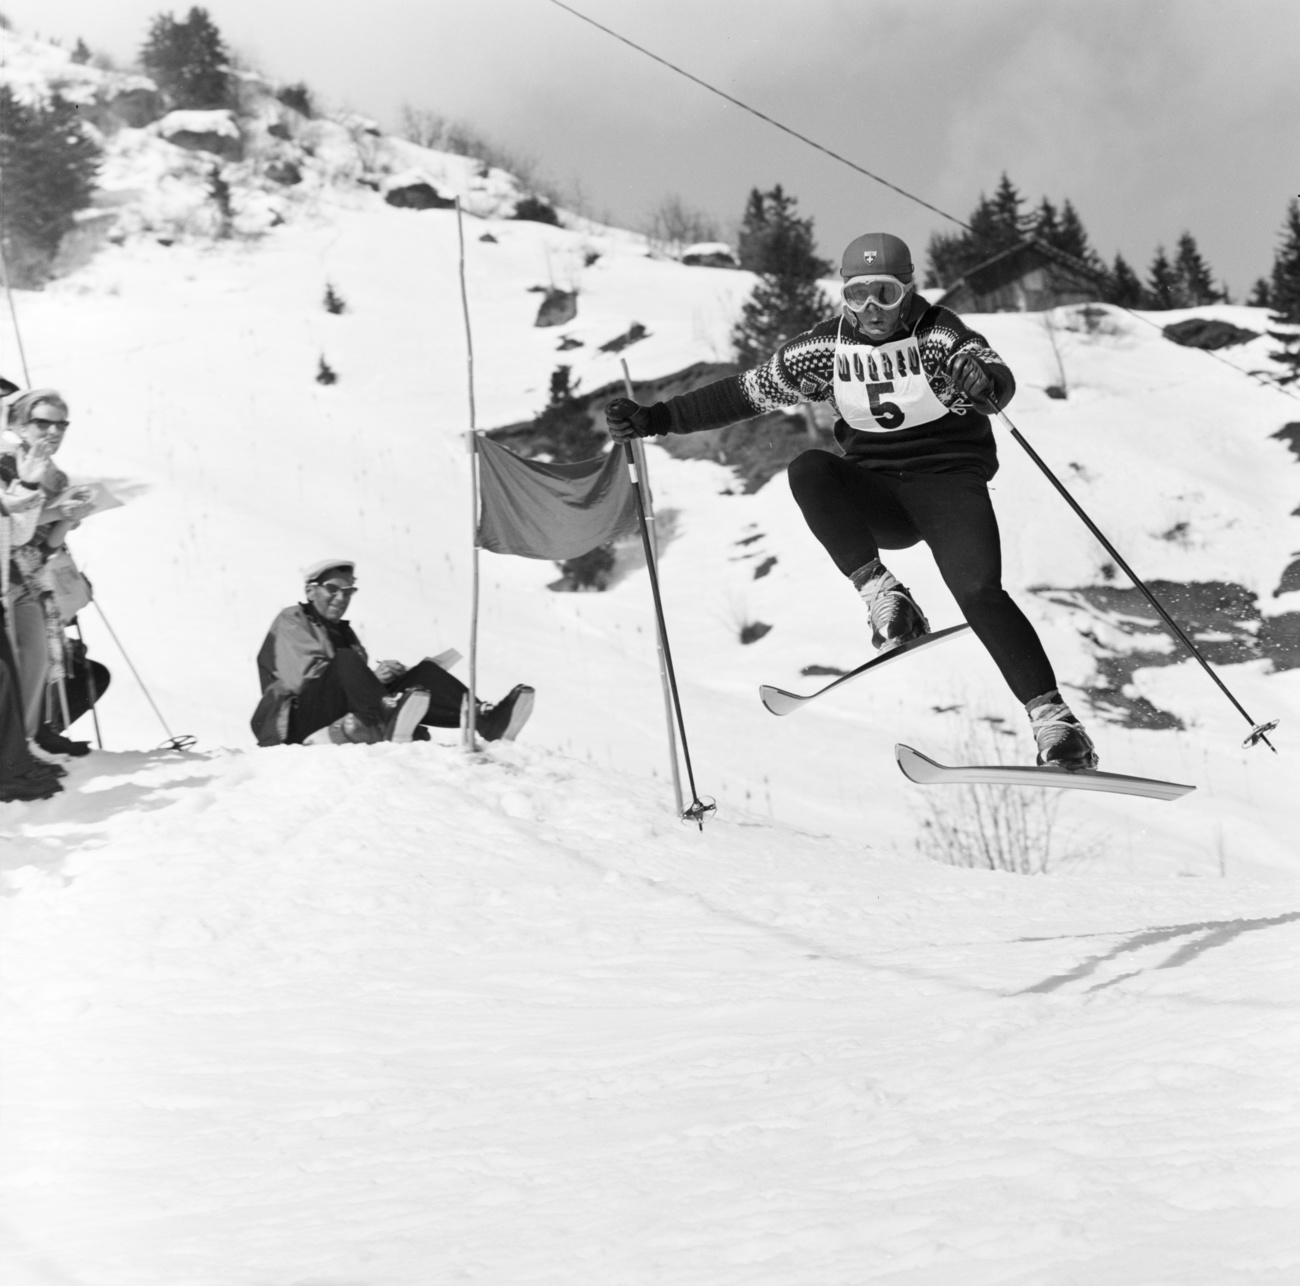 Meet the James Bond of Freestyle Skiing